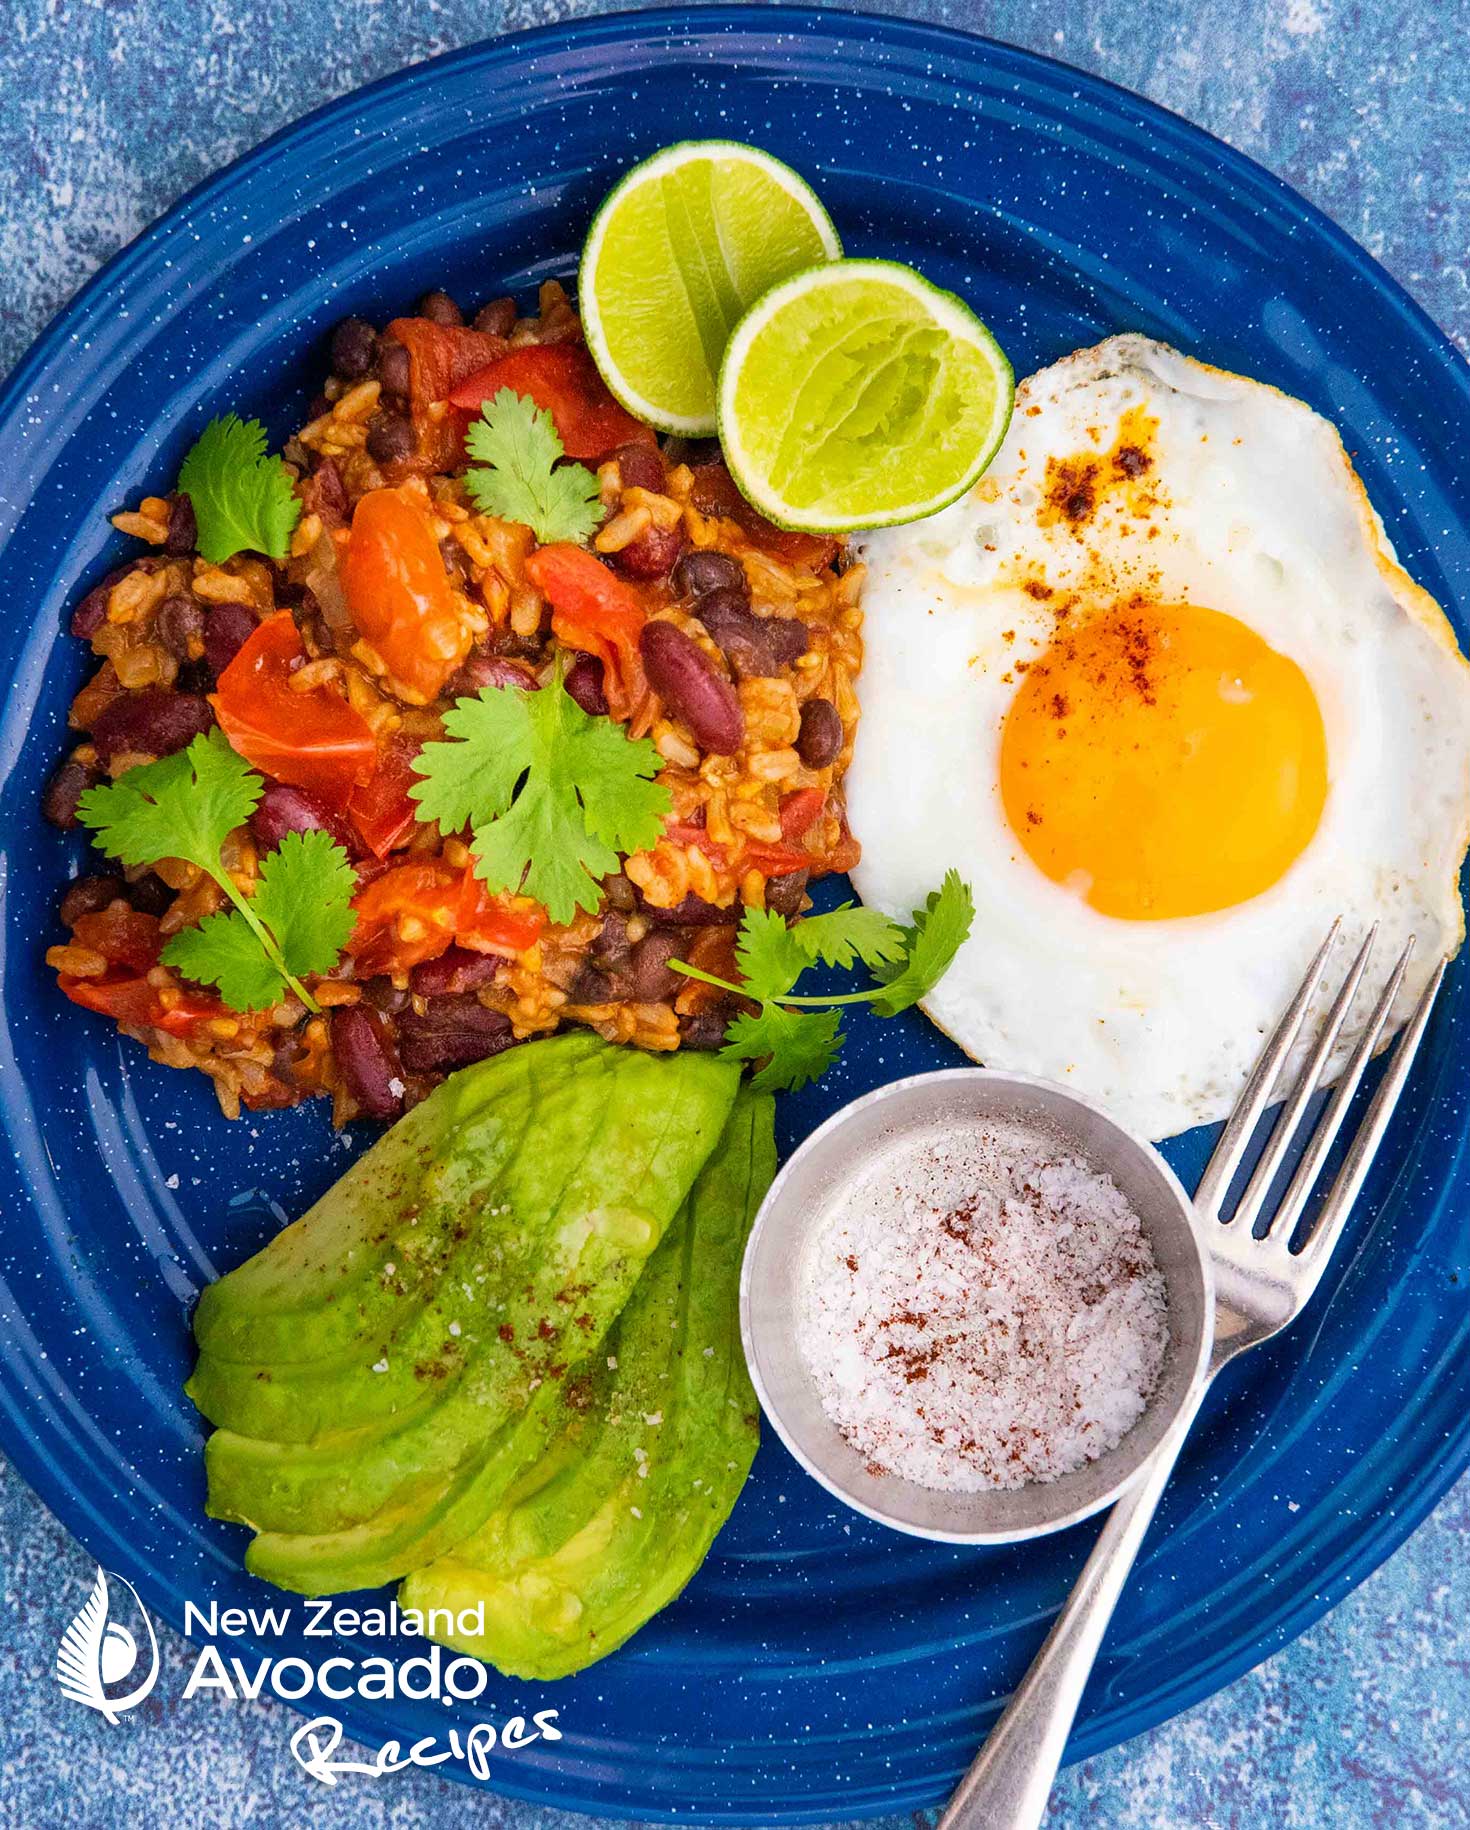 Spicy Mexican Avocado, Rice & Eggs